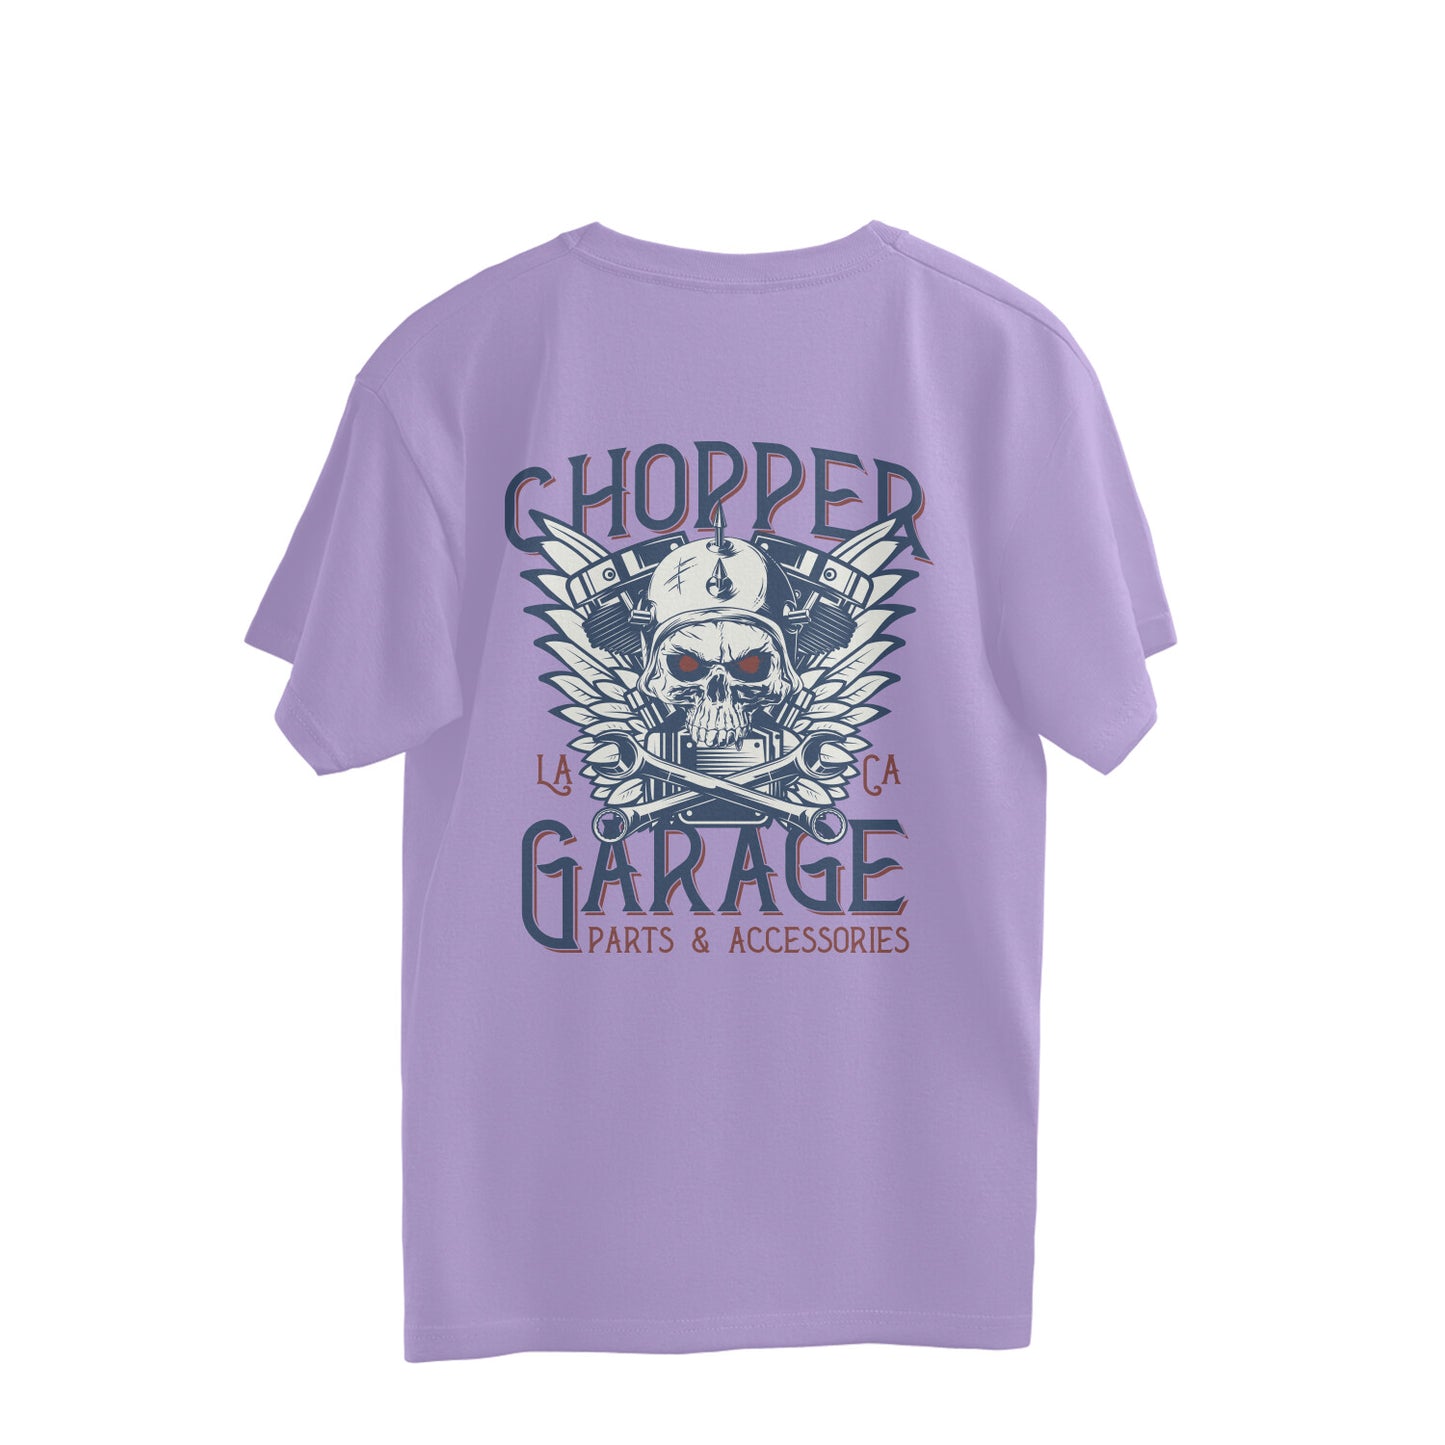 "Chopper Garage LA" Skull n Engine Motif (Back Printed) Oversized T-Shirt